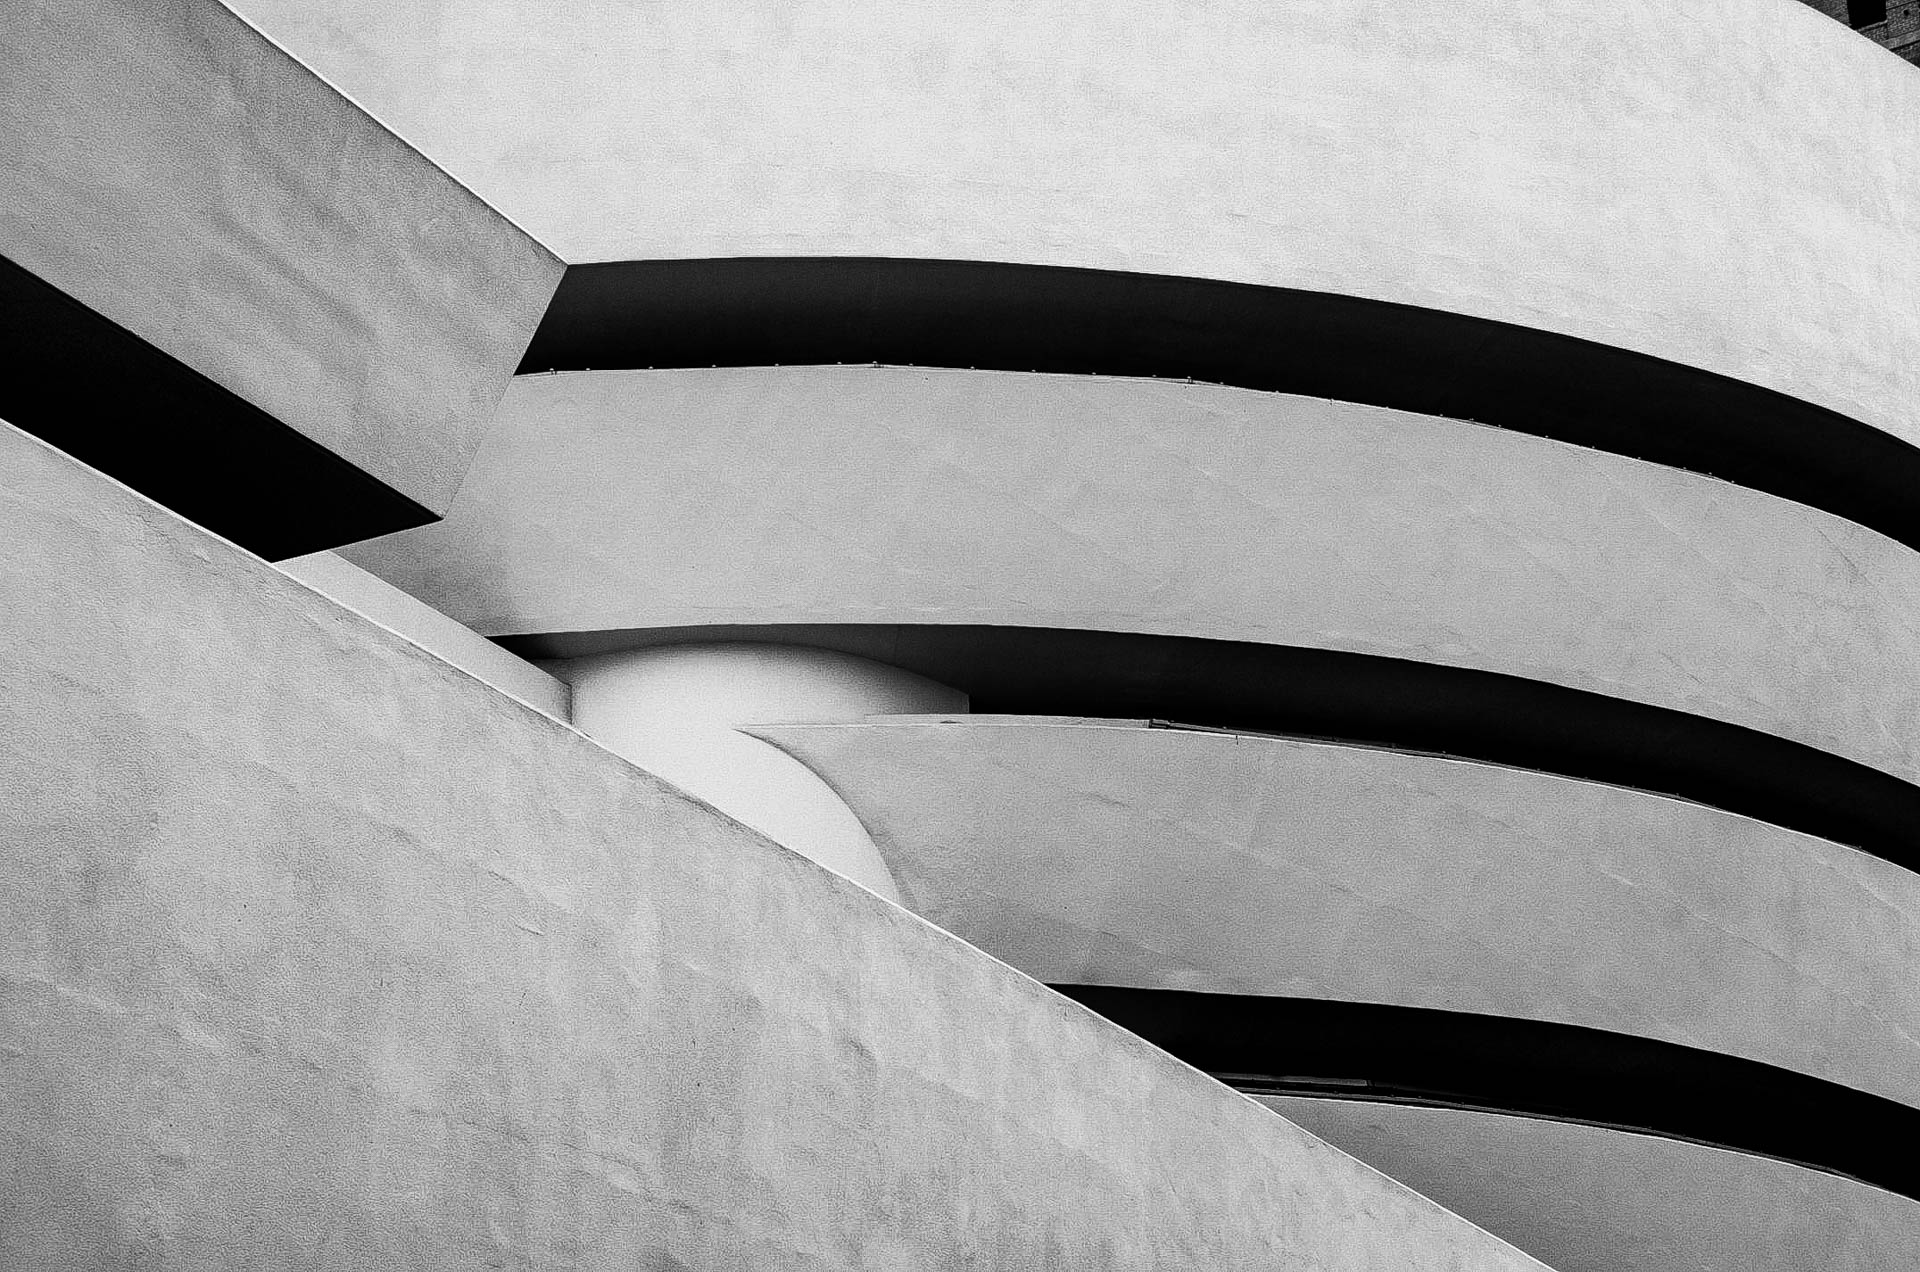 Frank Lloyd Wright-designed Guggenheim Museum